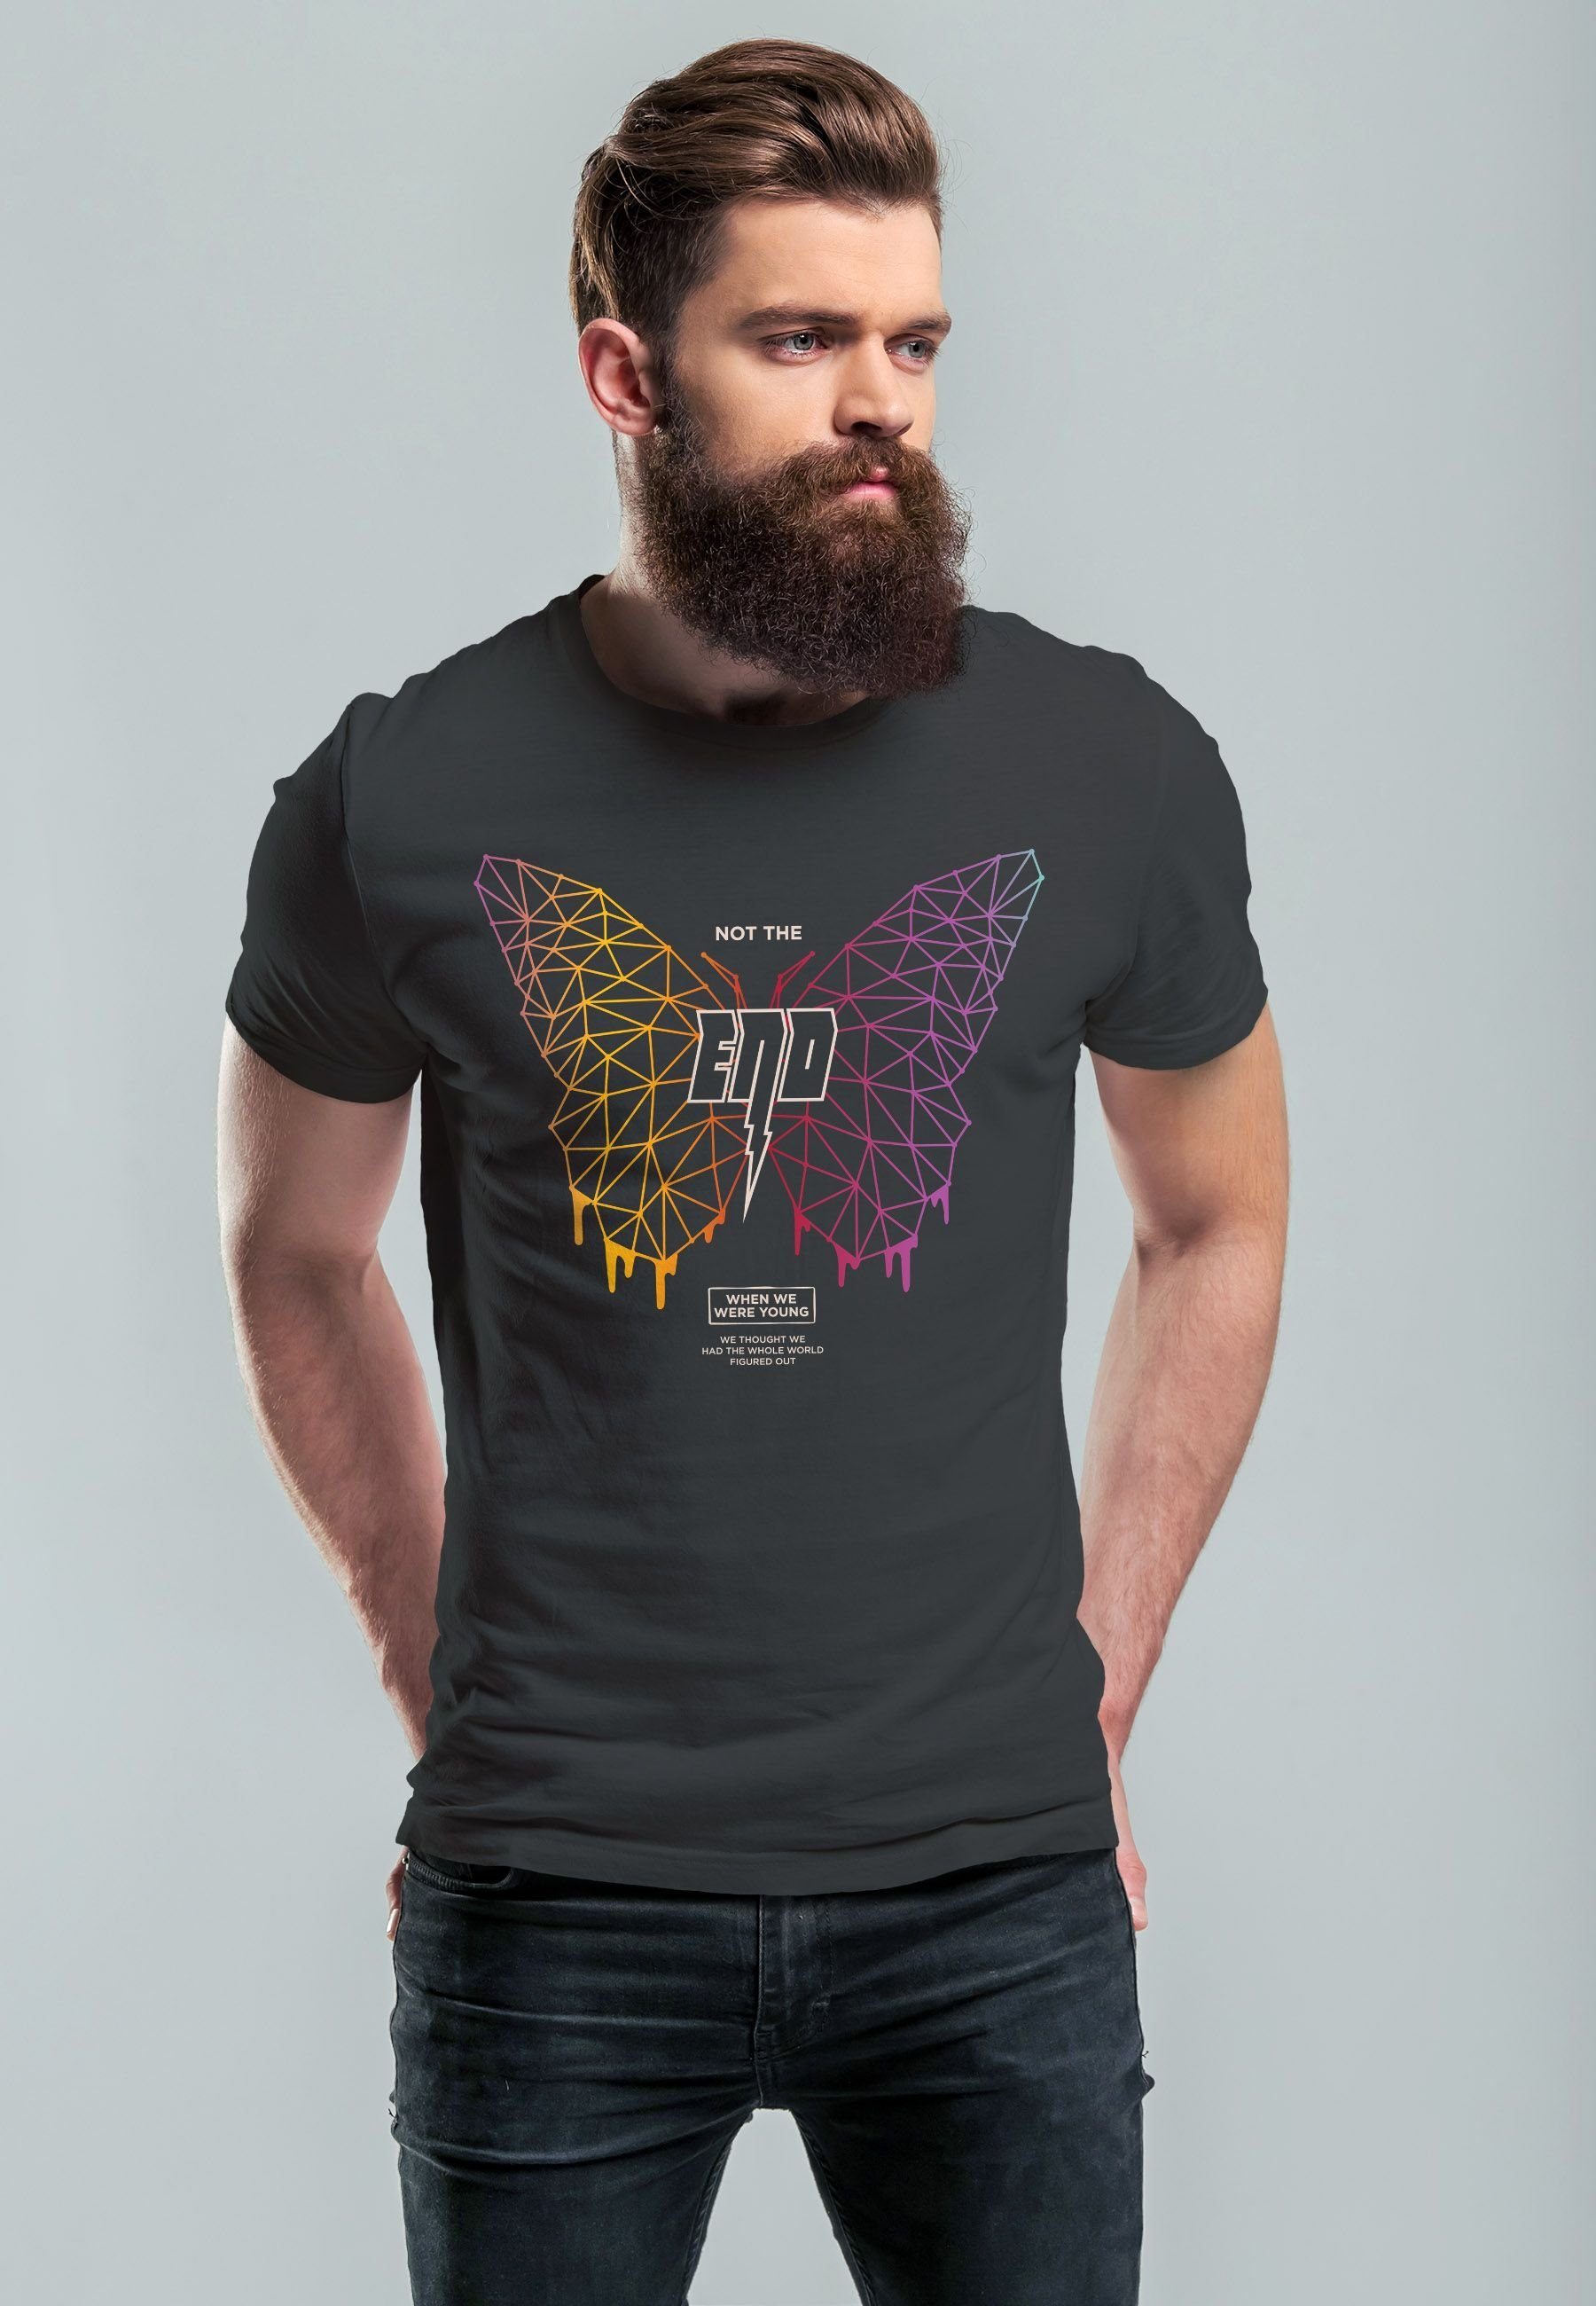 Neverless anthrazit Geometric Print Schmetterling Butterlfy Print-Shirt the Not mit T-Shirt Design Spruch Herren